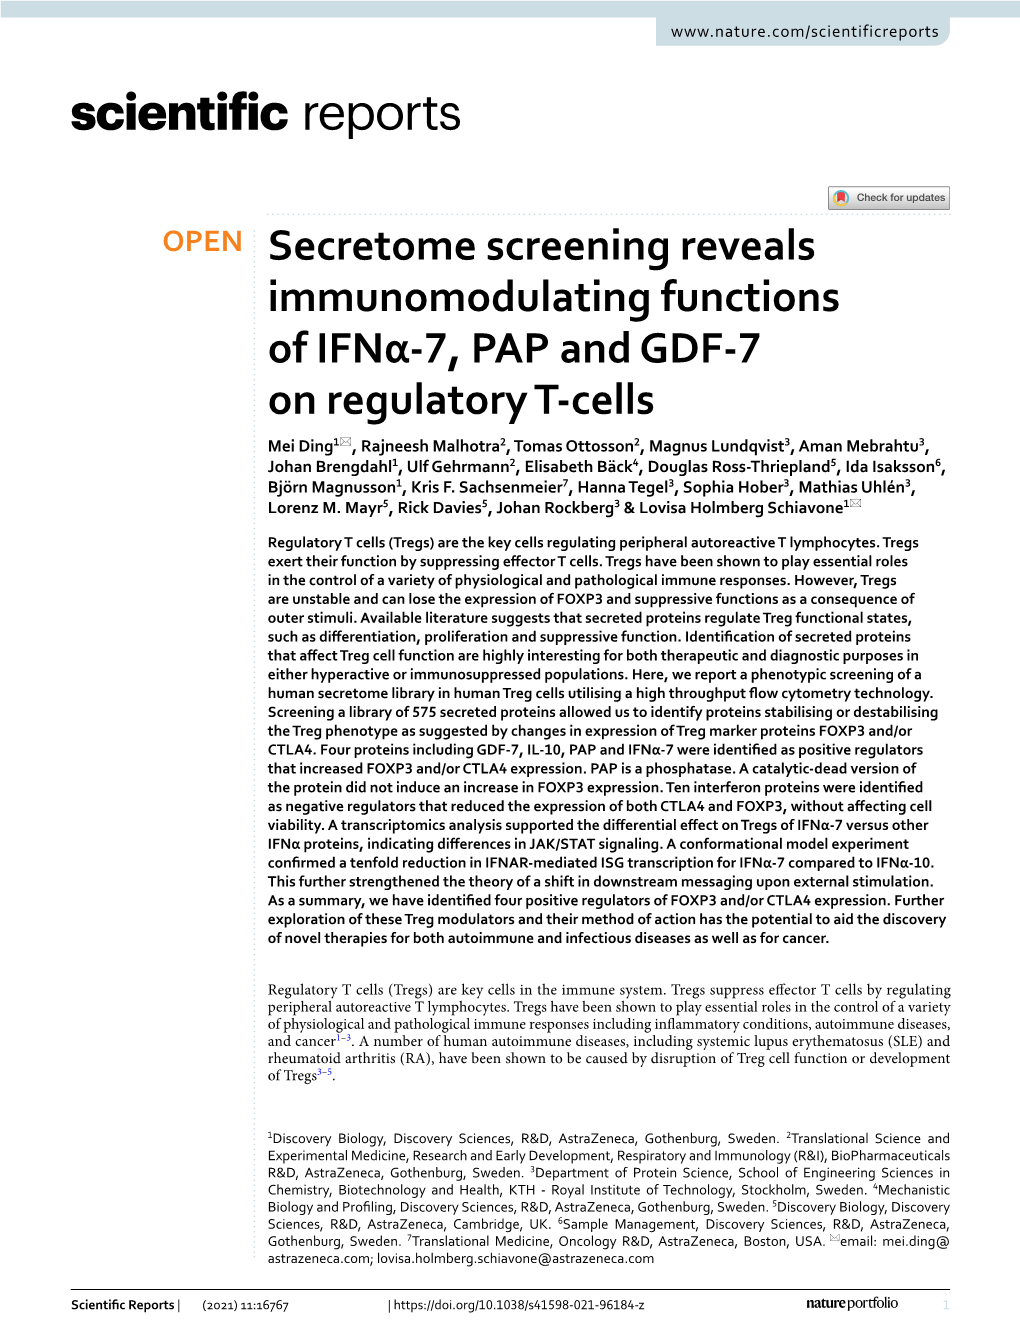 Secretome Screening Reveals Immunomodulating Functions Of